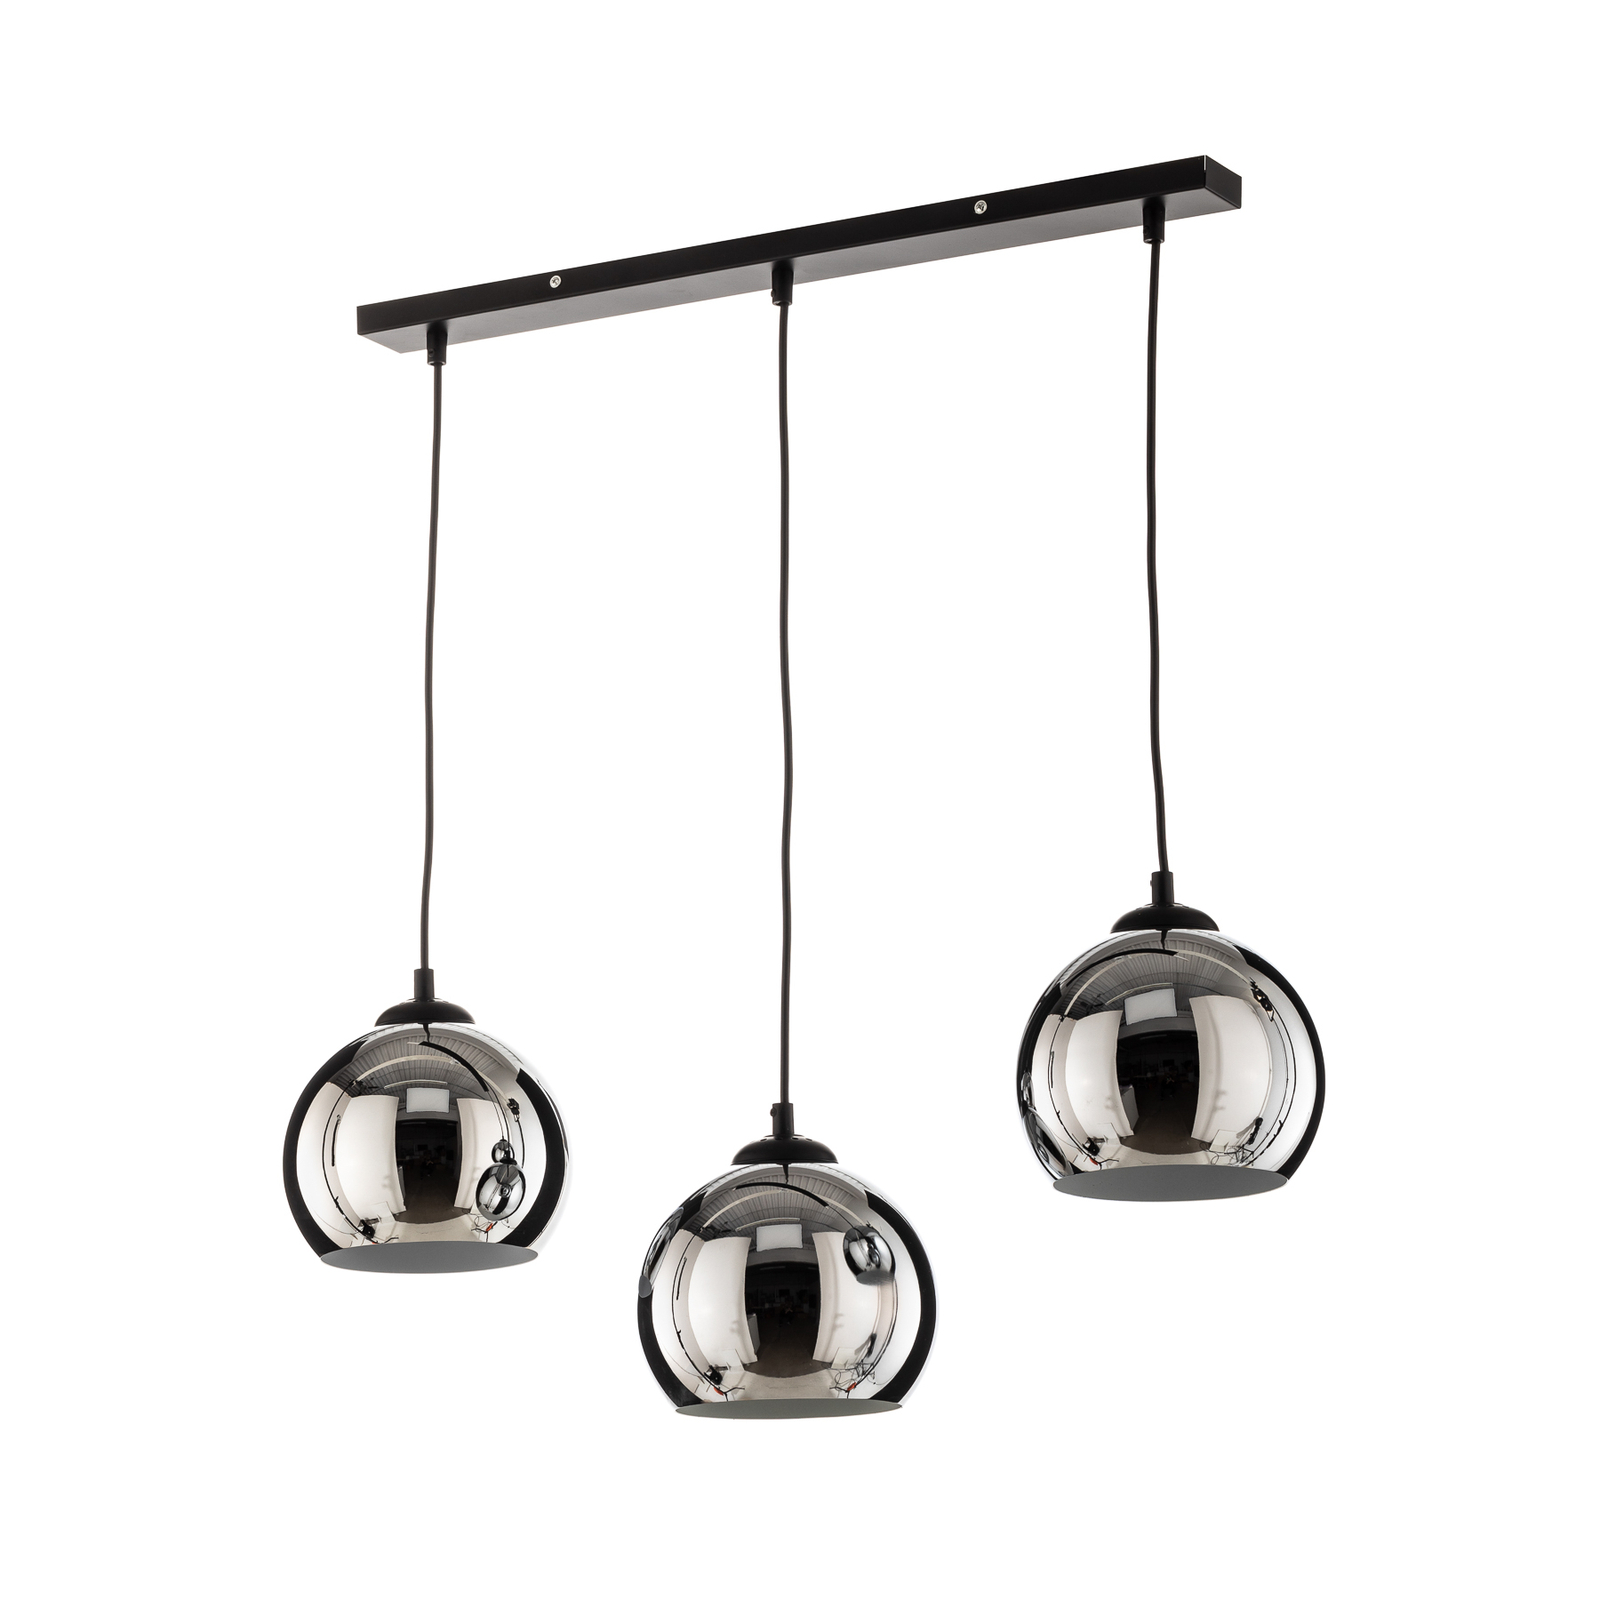 Hanglamp Tory zwart/chroom 3-lamps